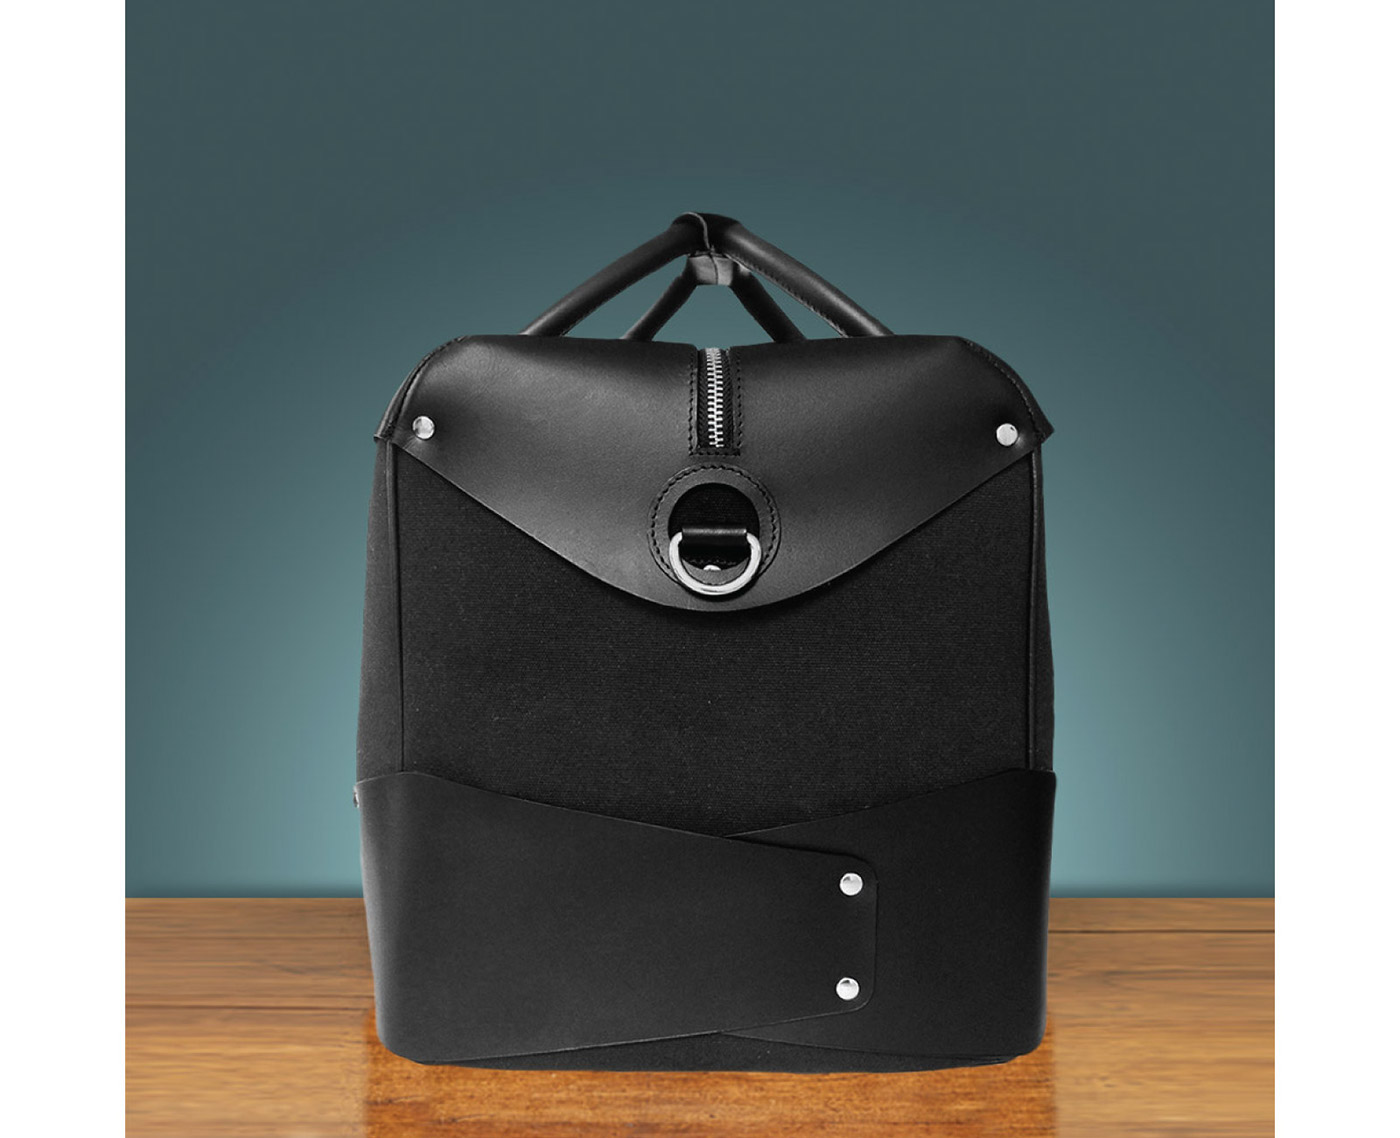 handcrafted leather duffle bag lifestyle Fashion  minimal classy Retro 60s fashion black